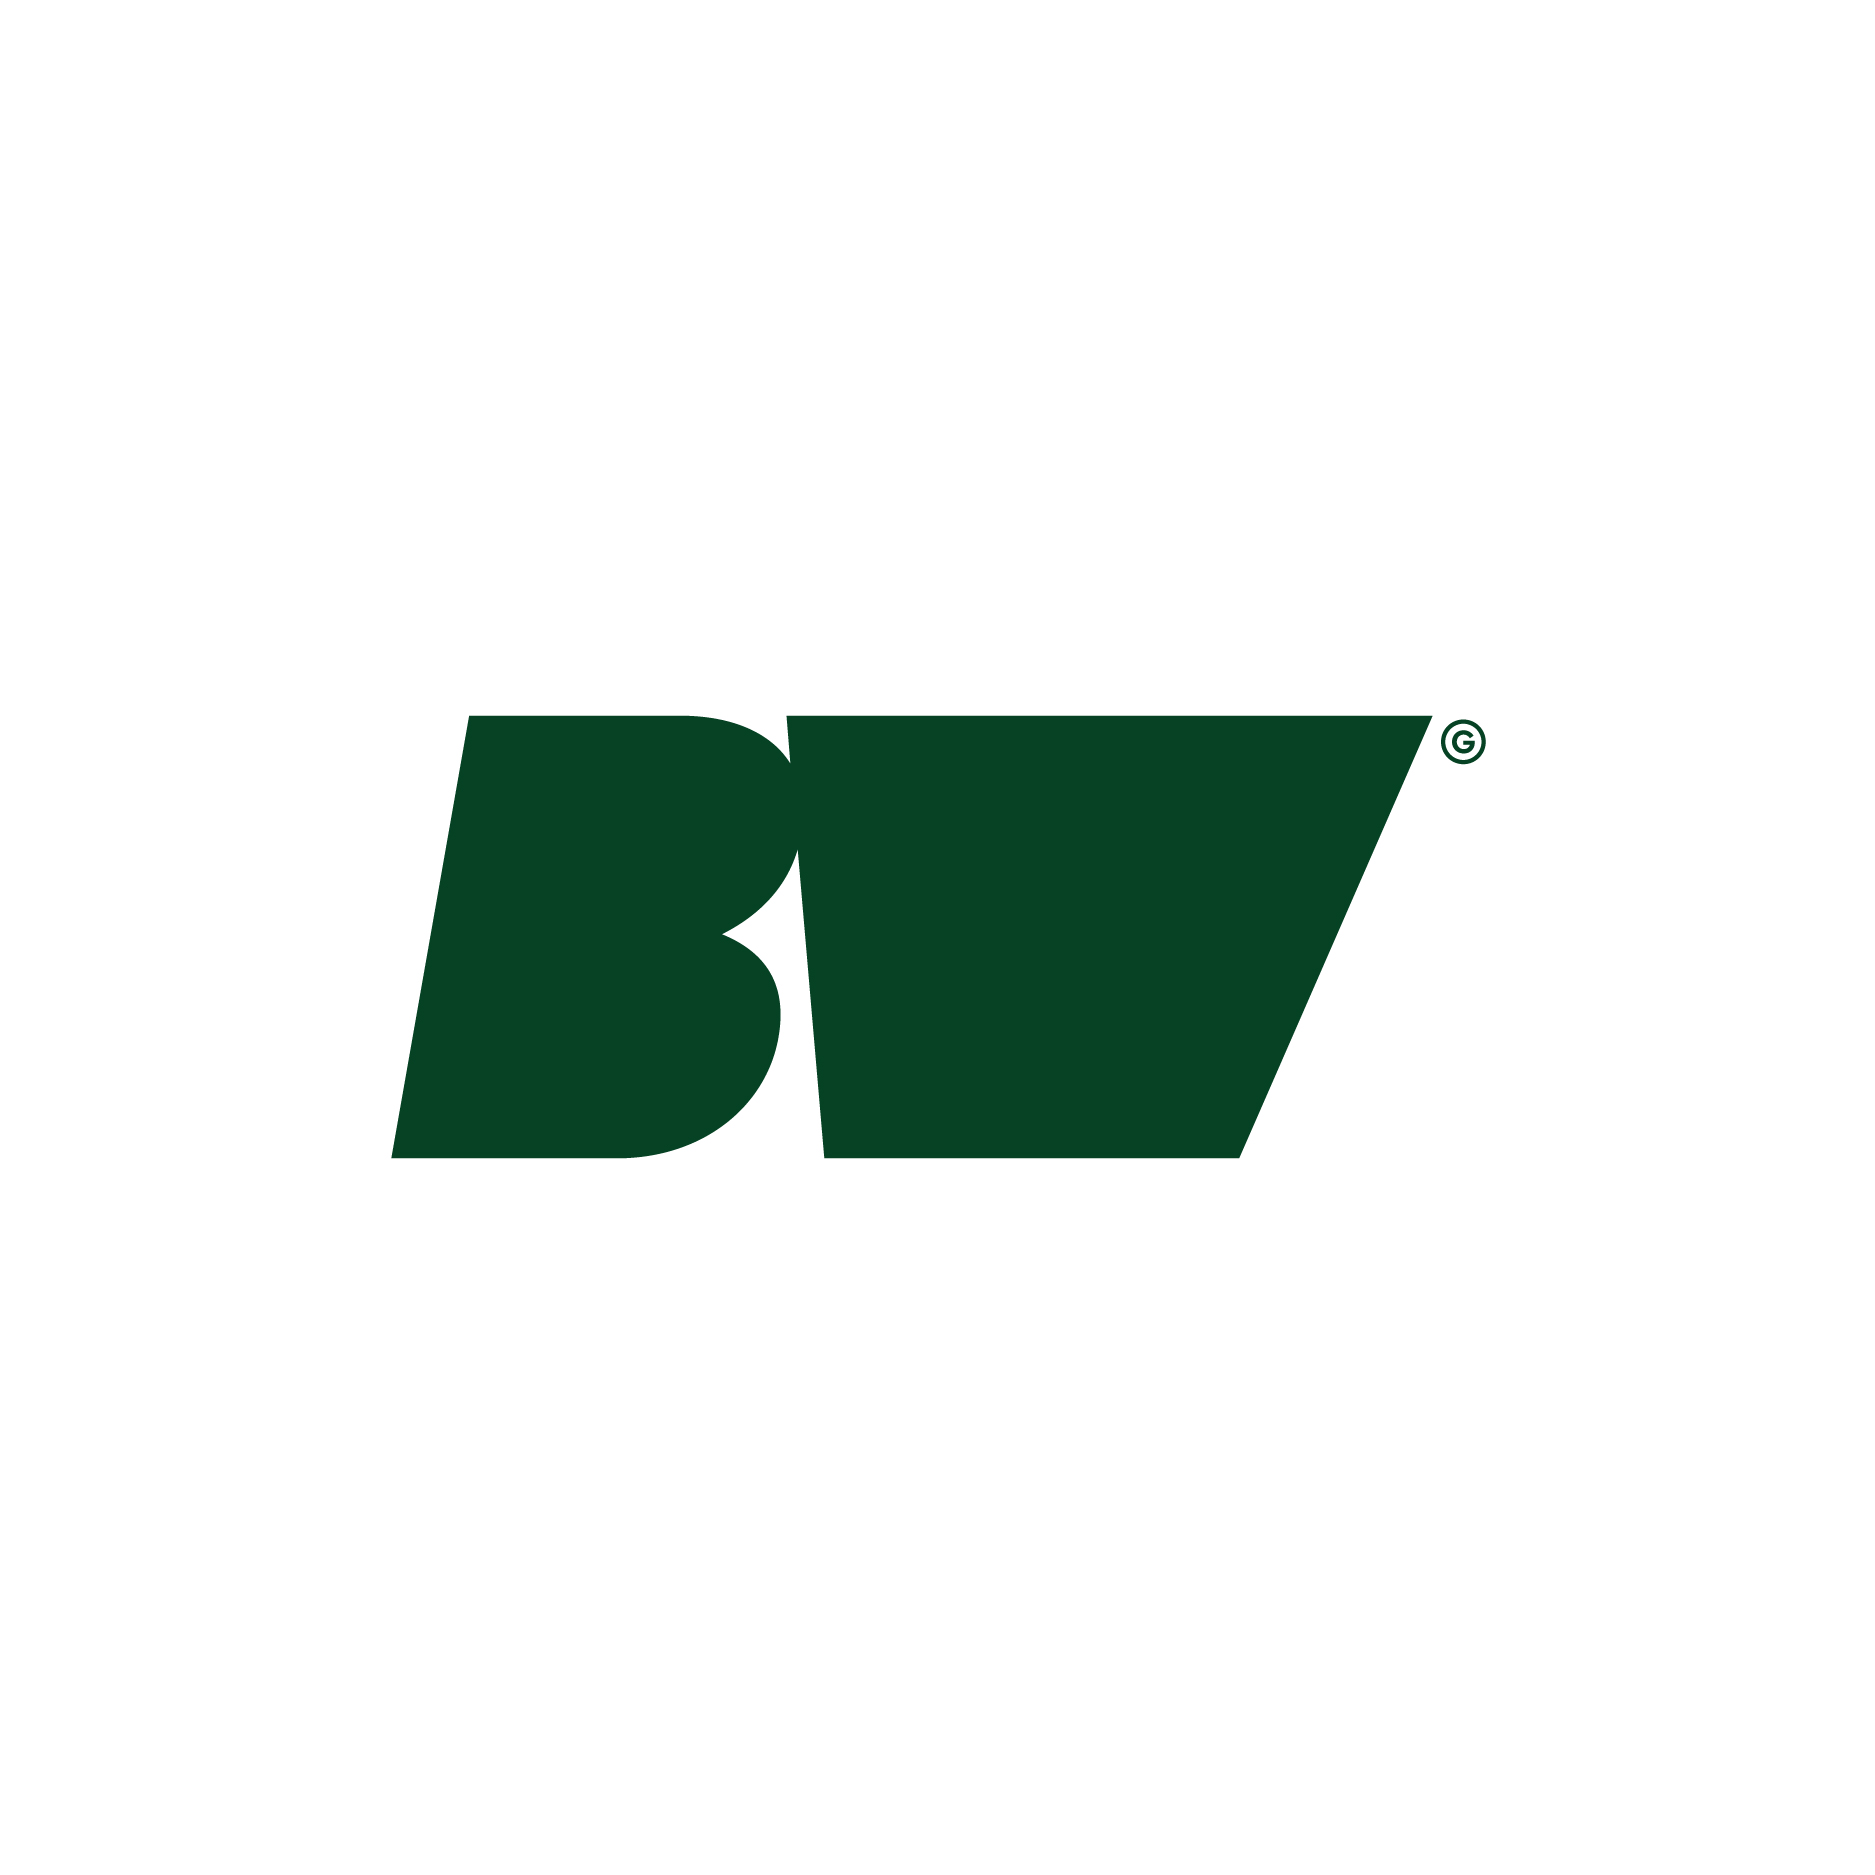 BW golf logo logo design by logo designer PJ Engel Design for your inspiration and for the worlds largest logo competition